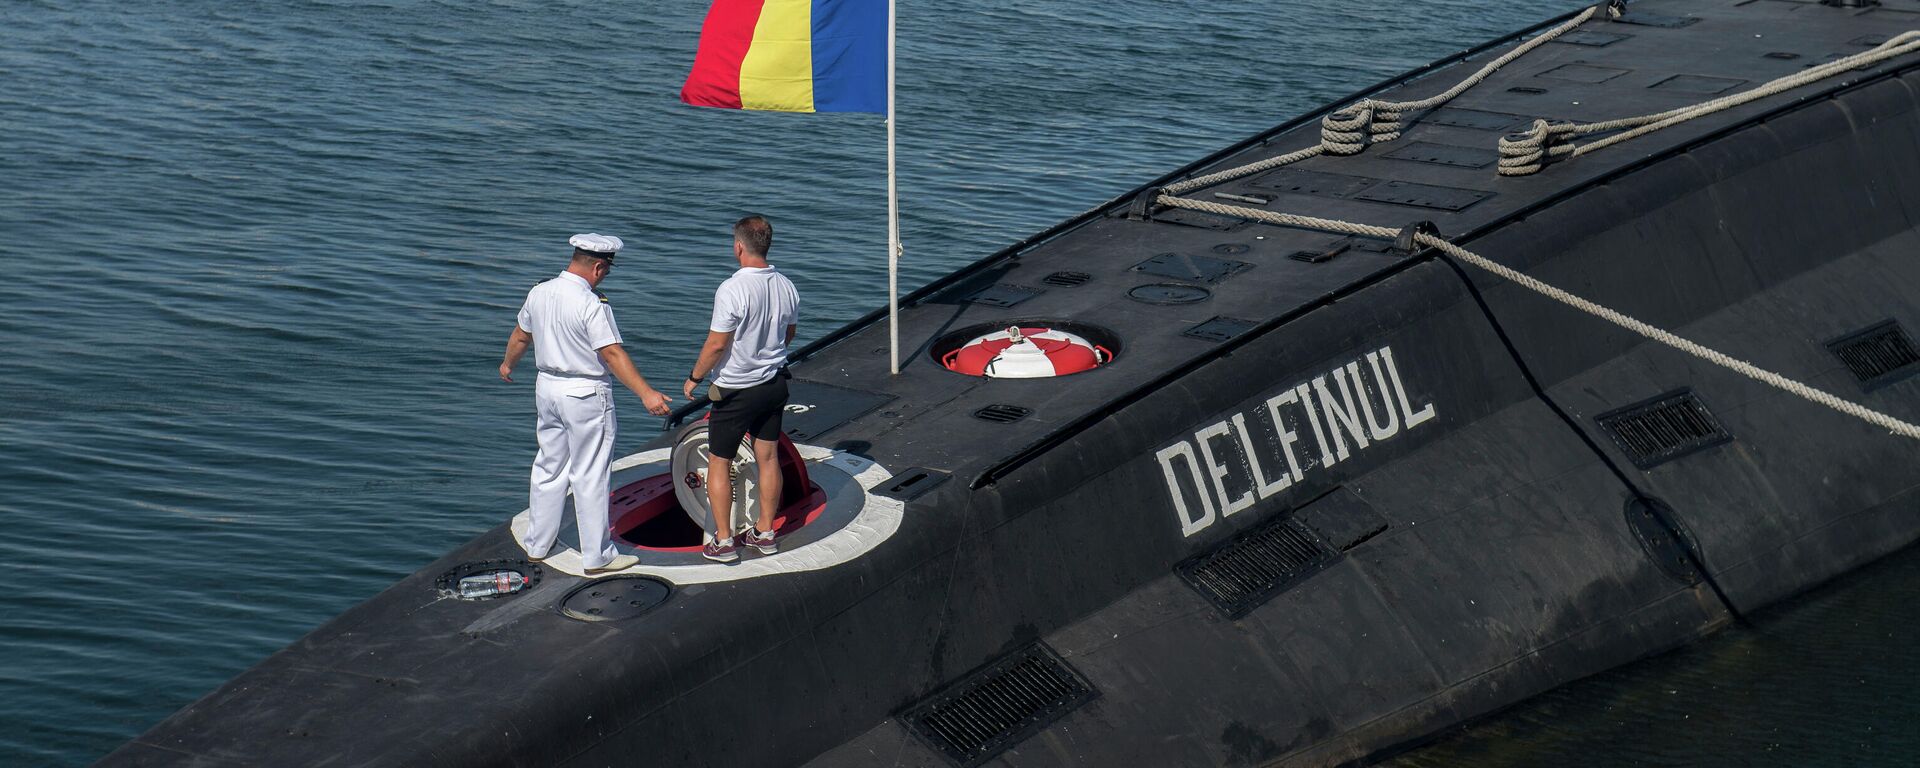 Submarinul Delfinul - Sputnik Moldova-România, 1920, 12.08.2021